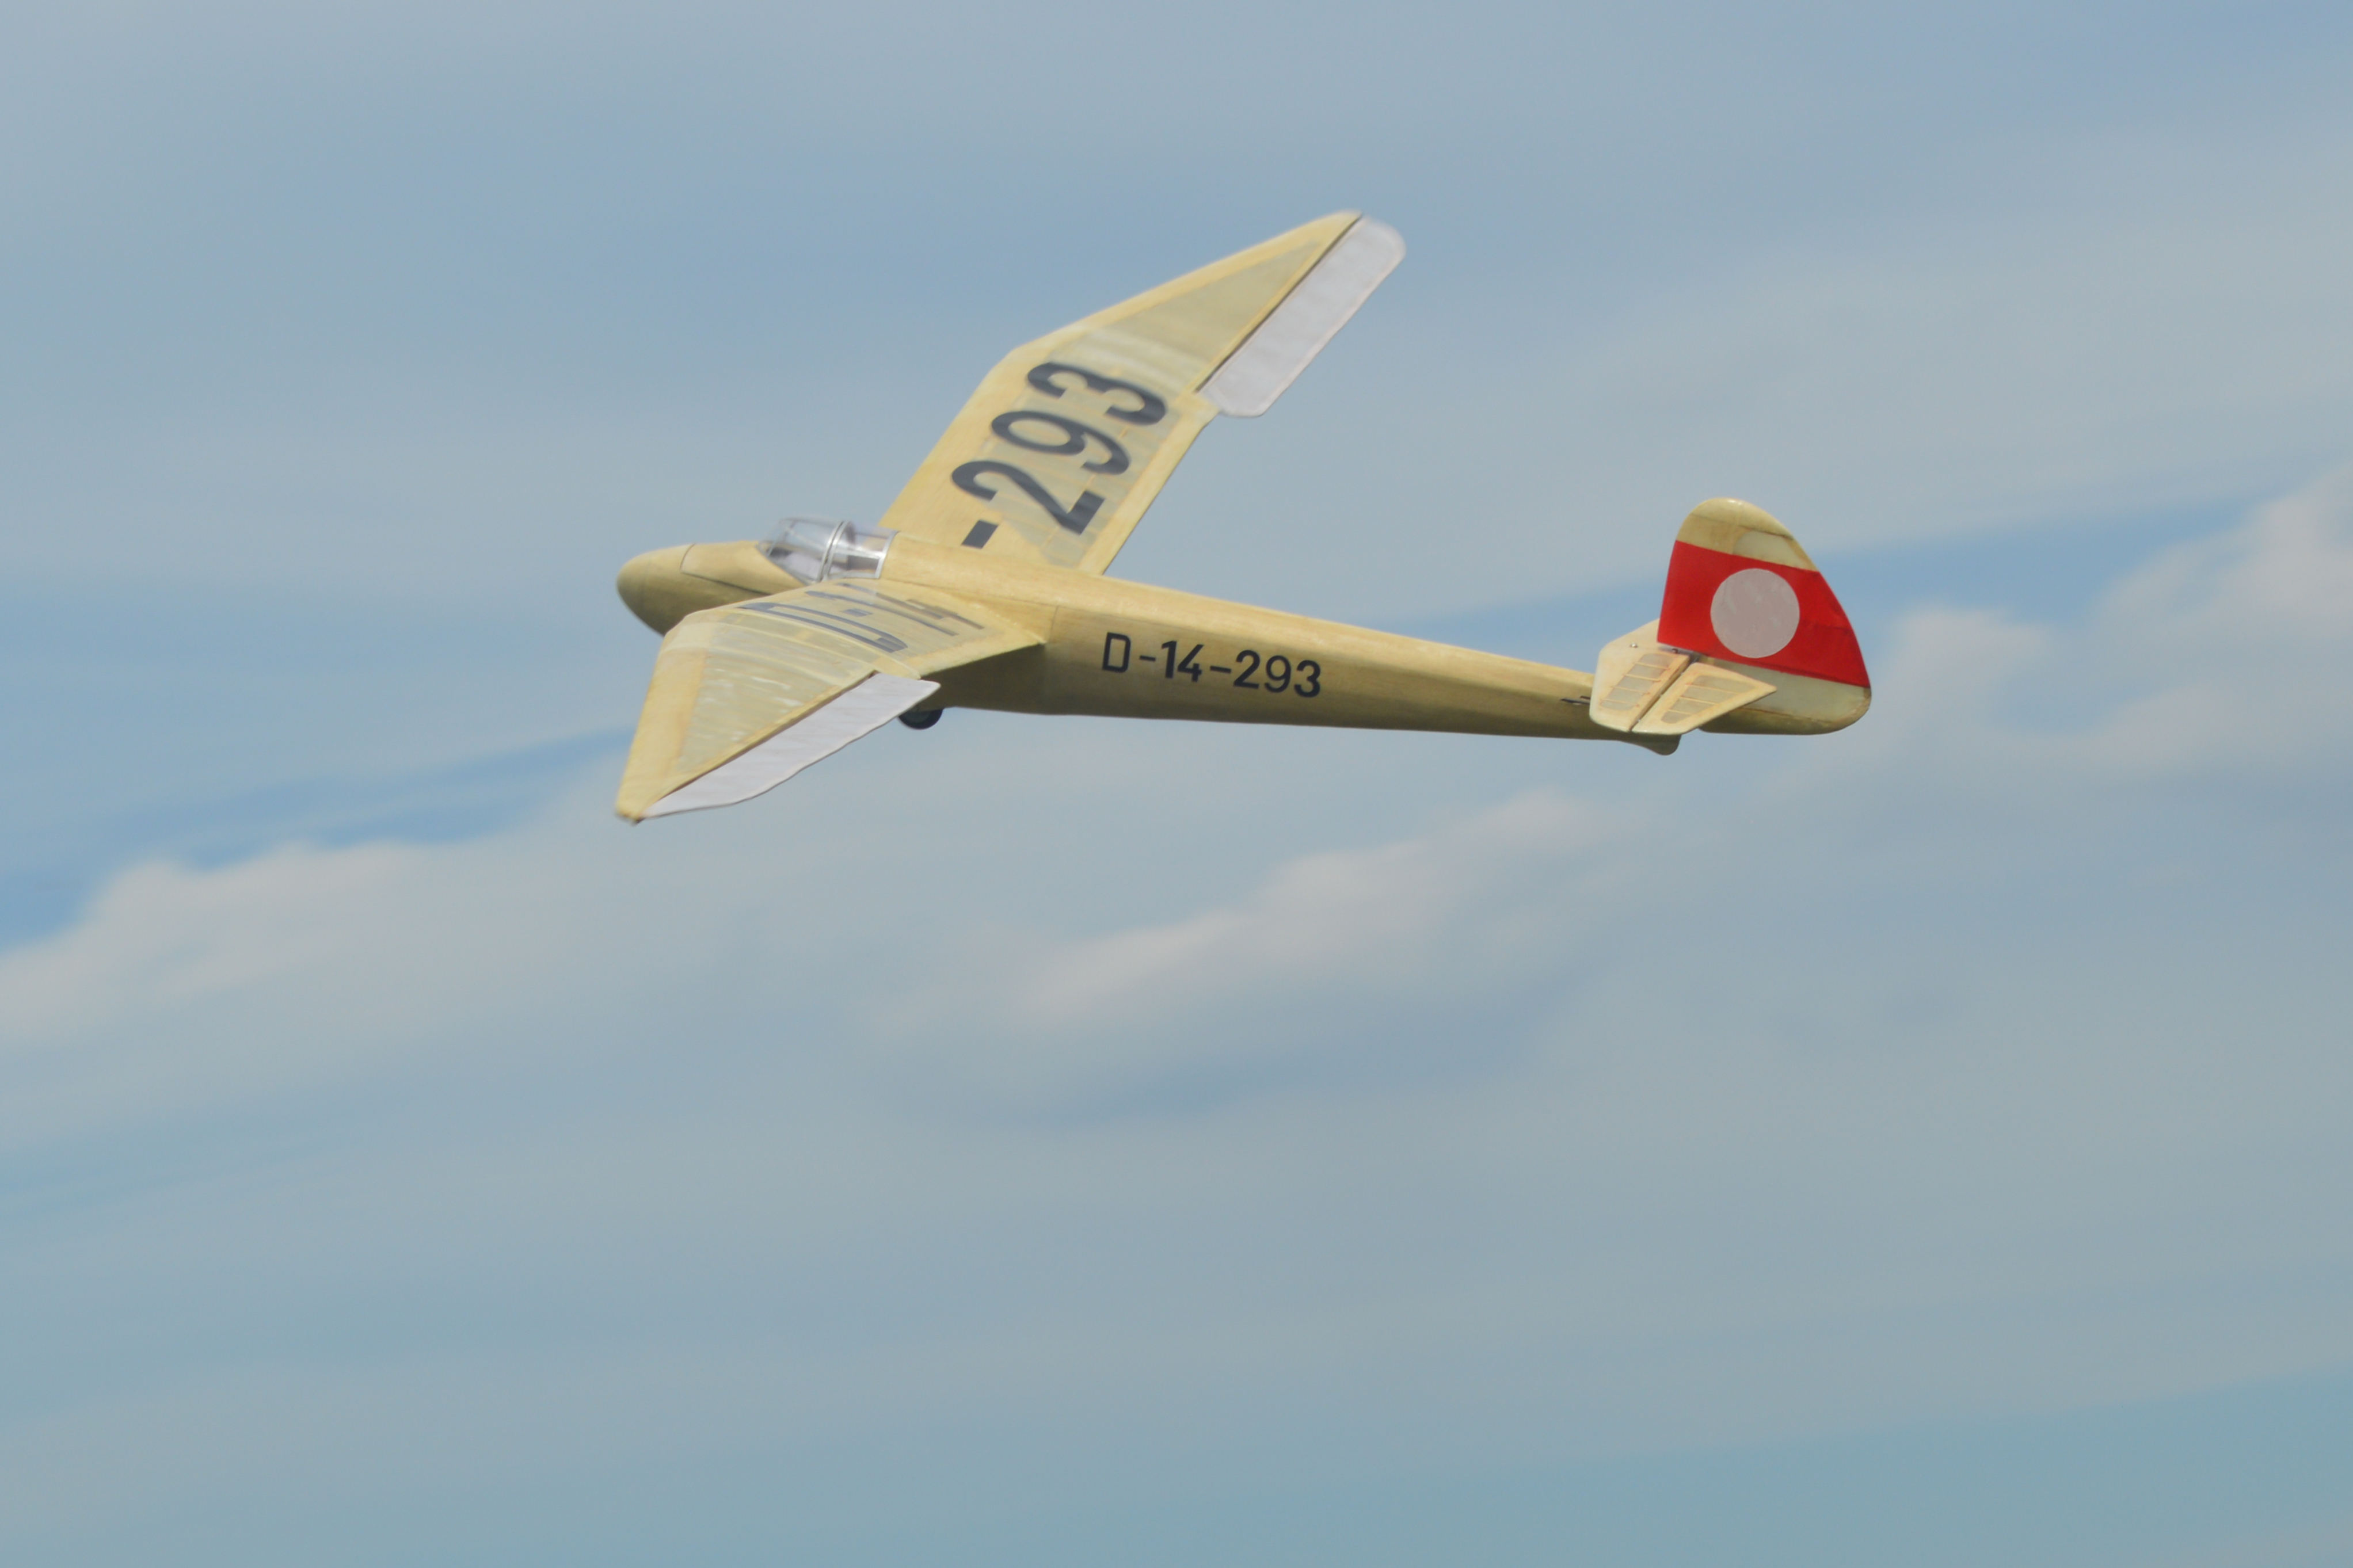 Tony-Rays-AeroModel-Minimoa-1422mm-Wingspan-112-Scale-Balsa-Wood-Laser-Cut-RC-Airplane-Glider-KIT-1802443-7